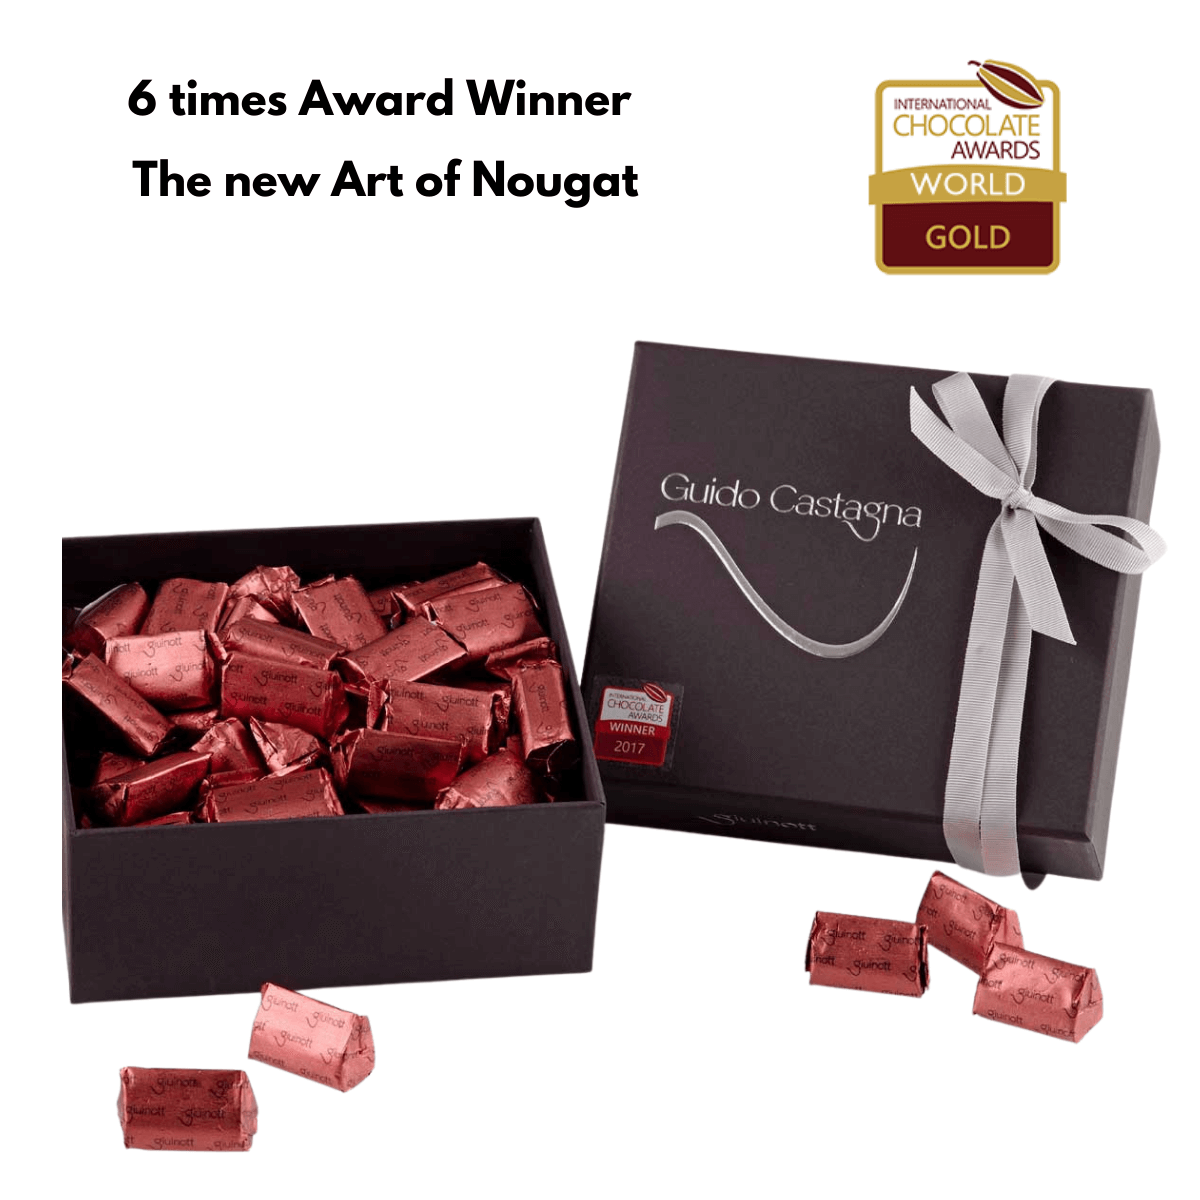 Guido Castagna Giuinott - mehrfacher Gold Award Gewinner der International Chocolate Awards in dekorativer Geschenkschachtel. Ideal auch zu Ostern